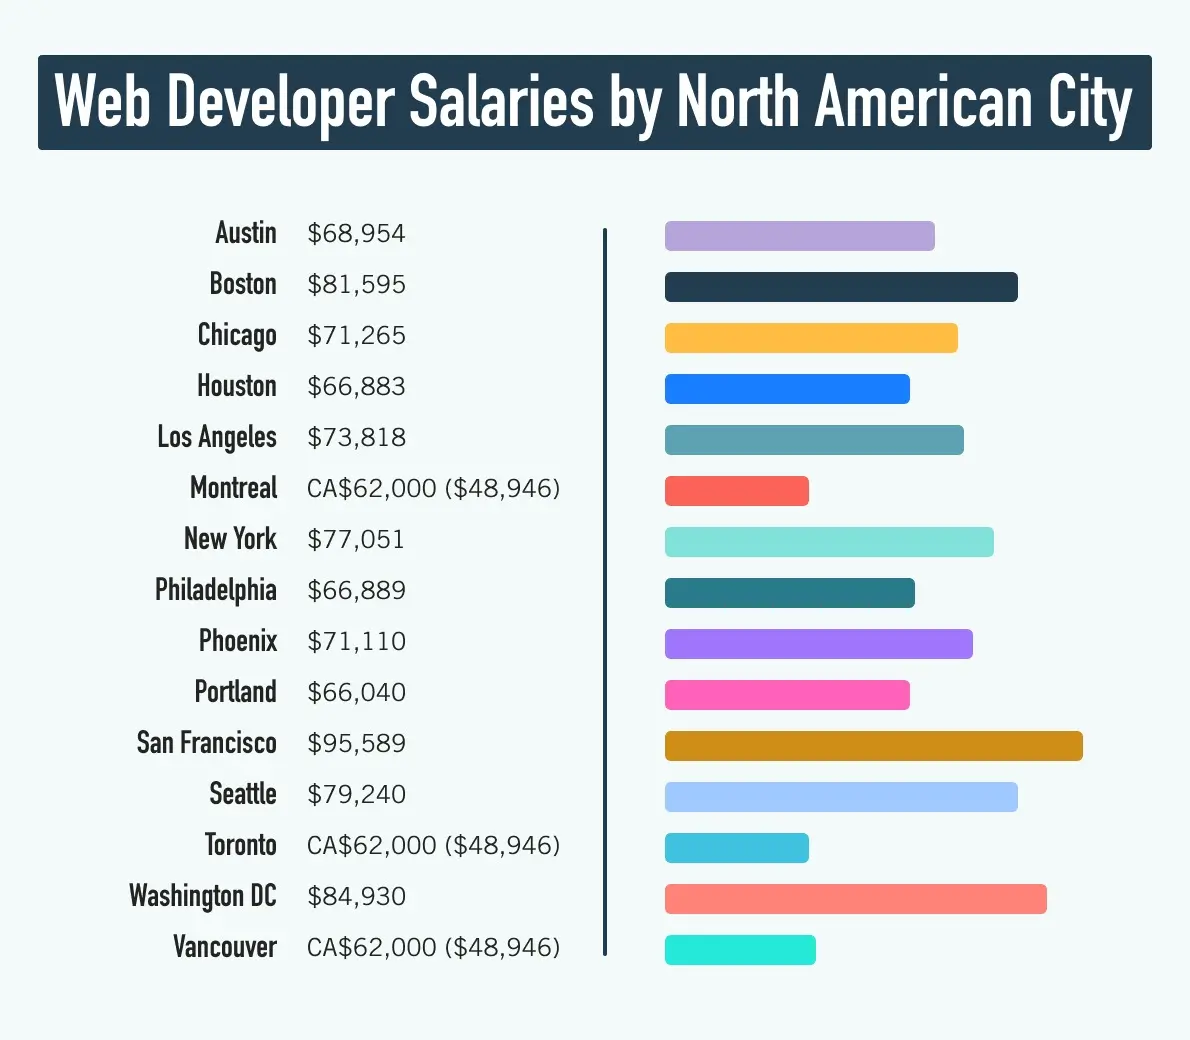 Graphic comparing web developer salaries between North American cities.